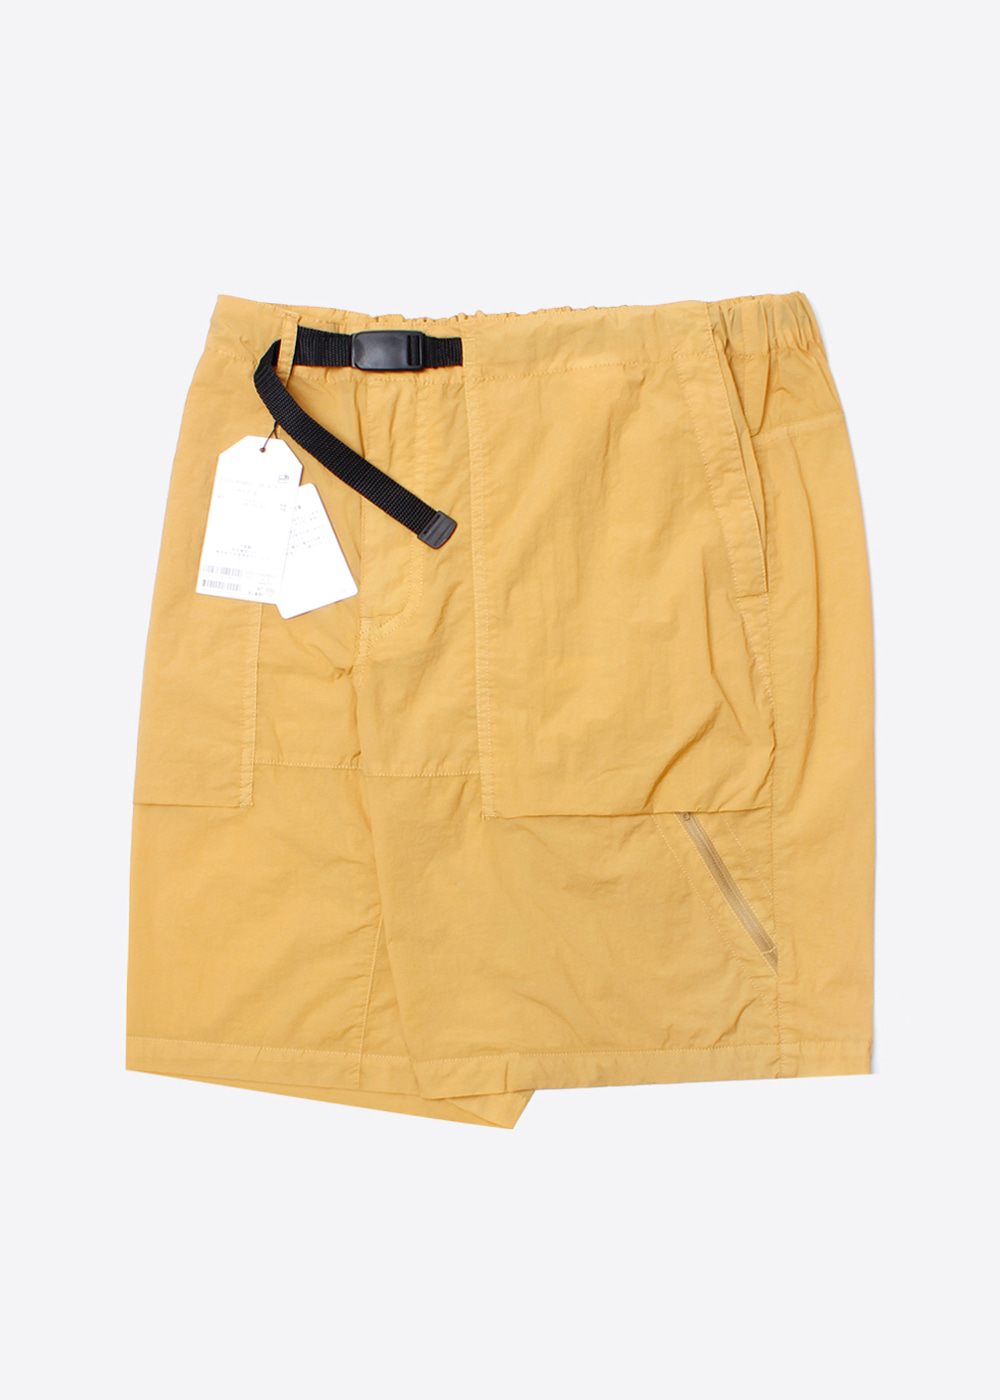 CIAOPANIC TYPY’loose fit’nylon multi pocket shorts